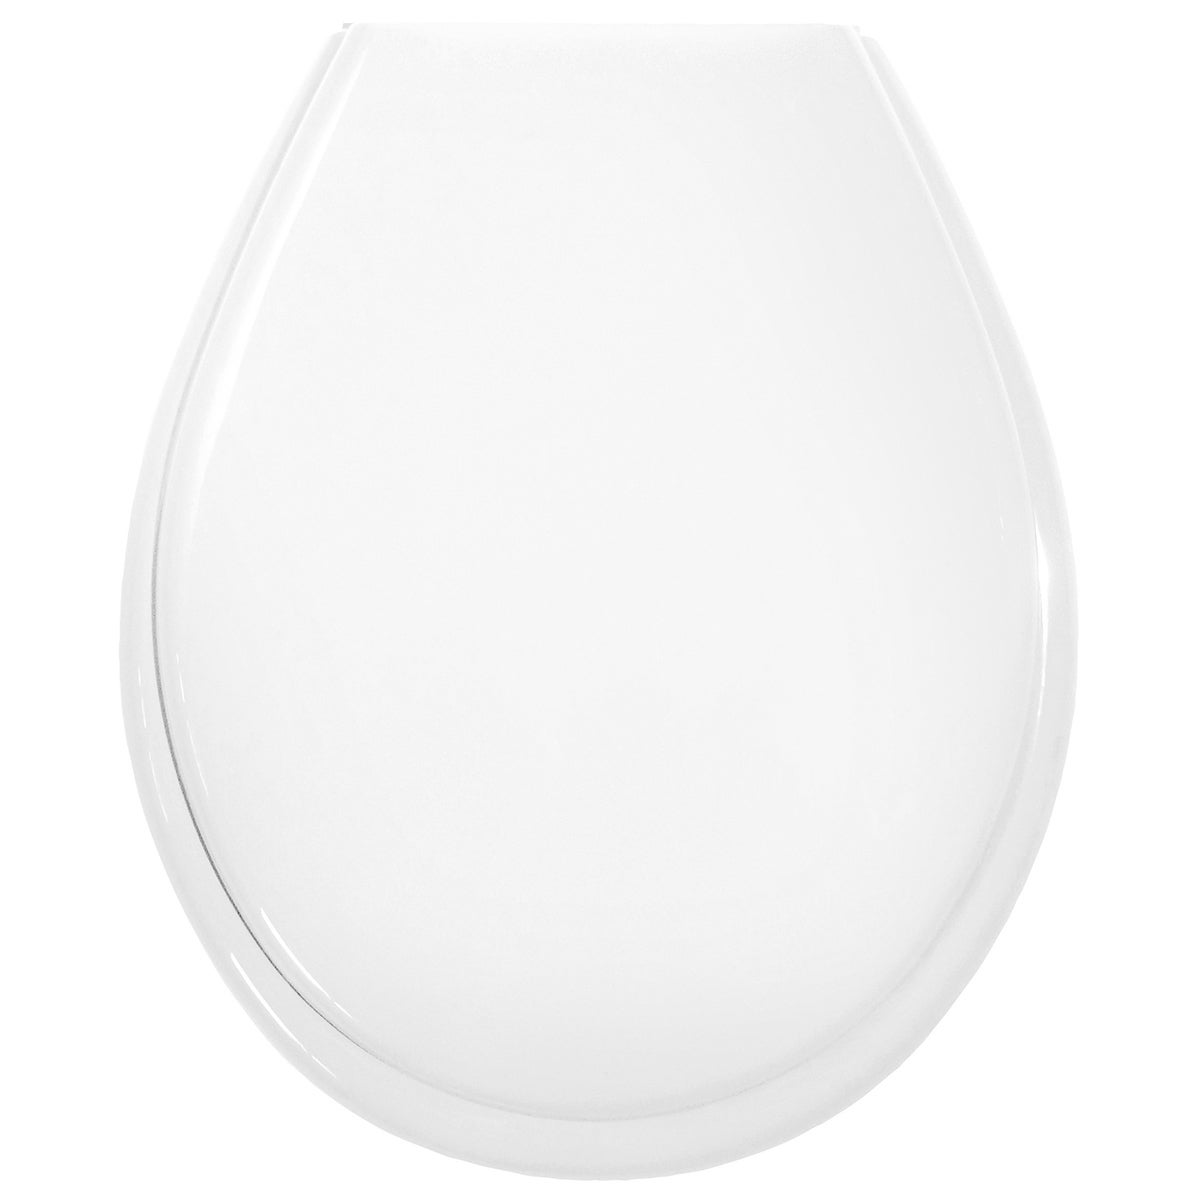 Abattant wc double blanc en polypropylène Monaco SIAMP - Plomberie Online